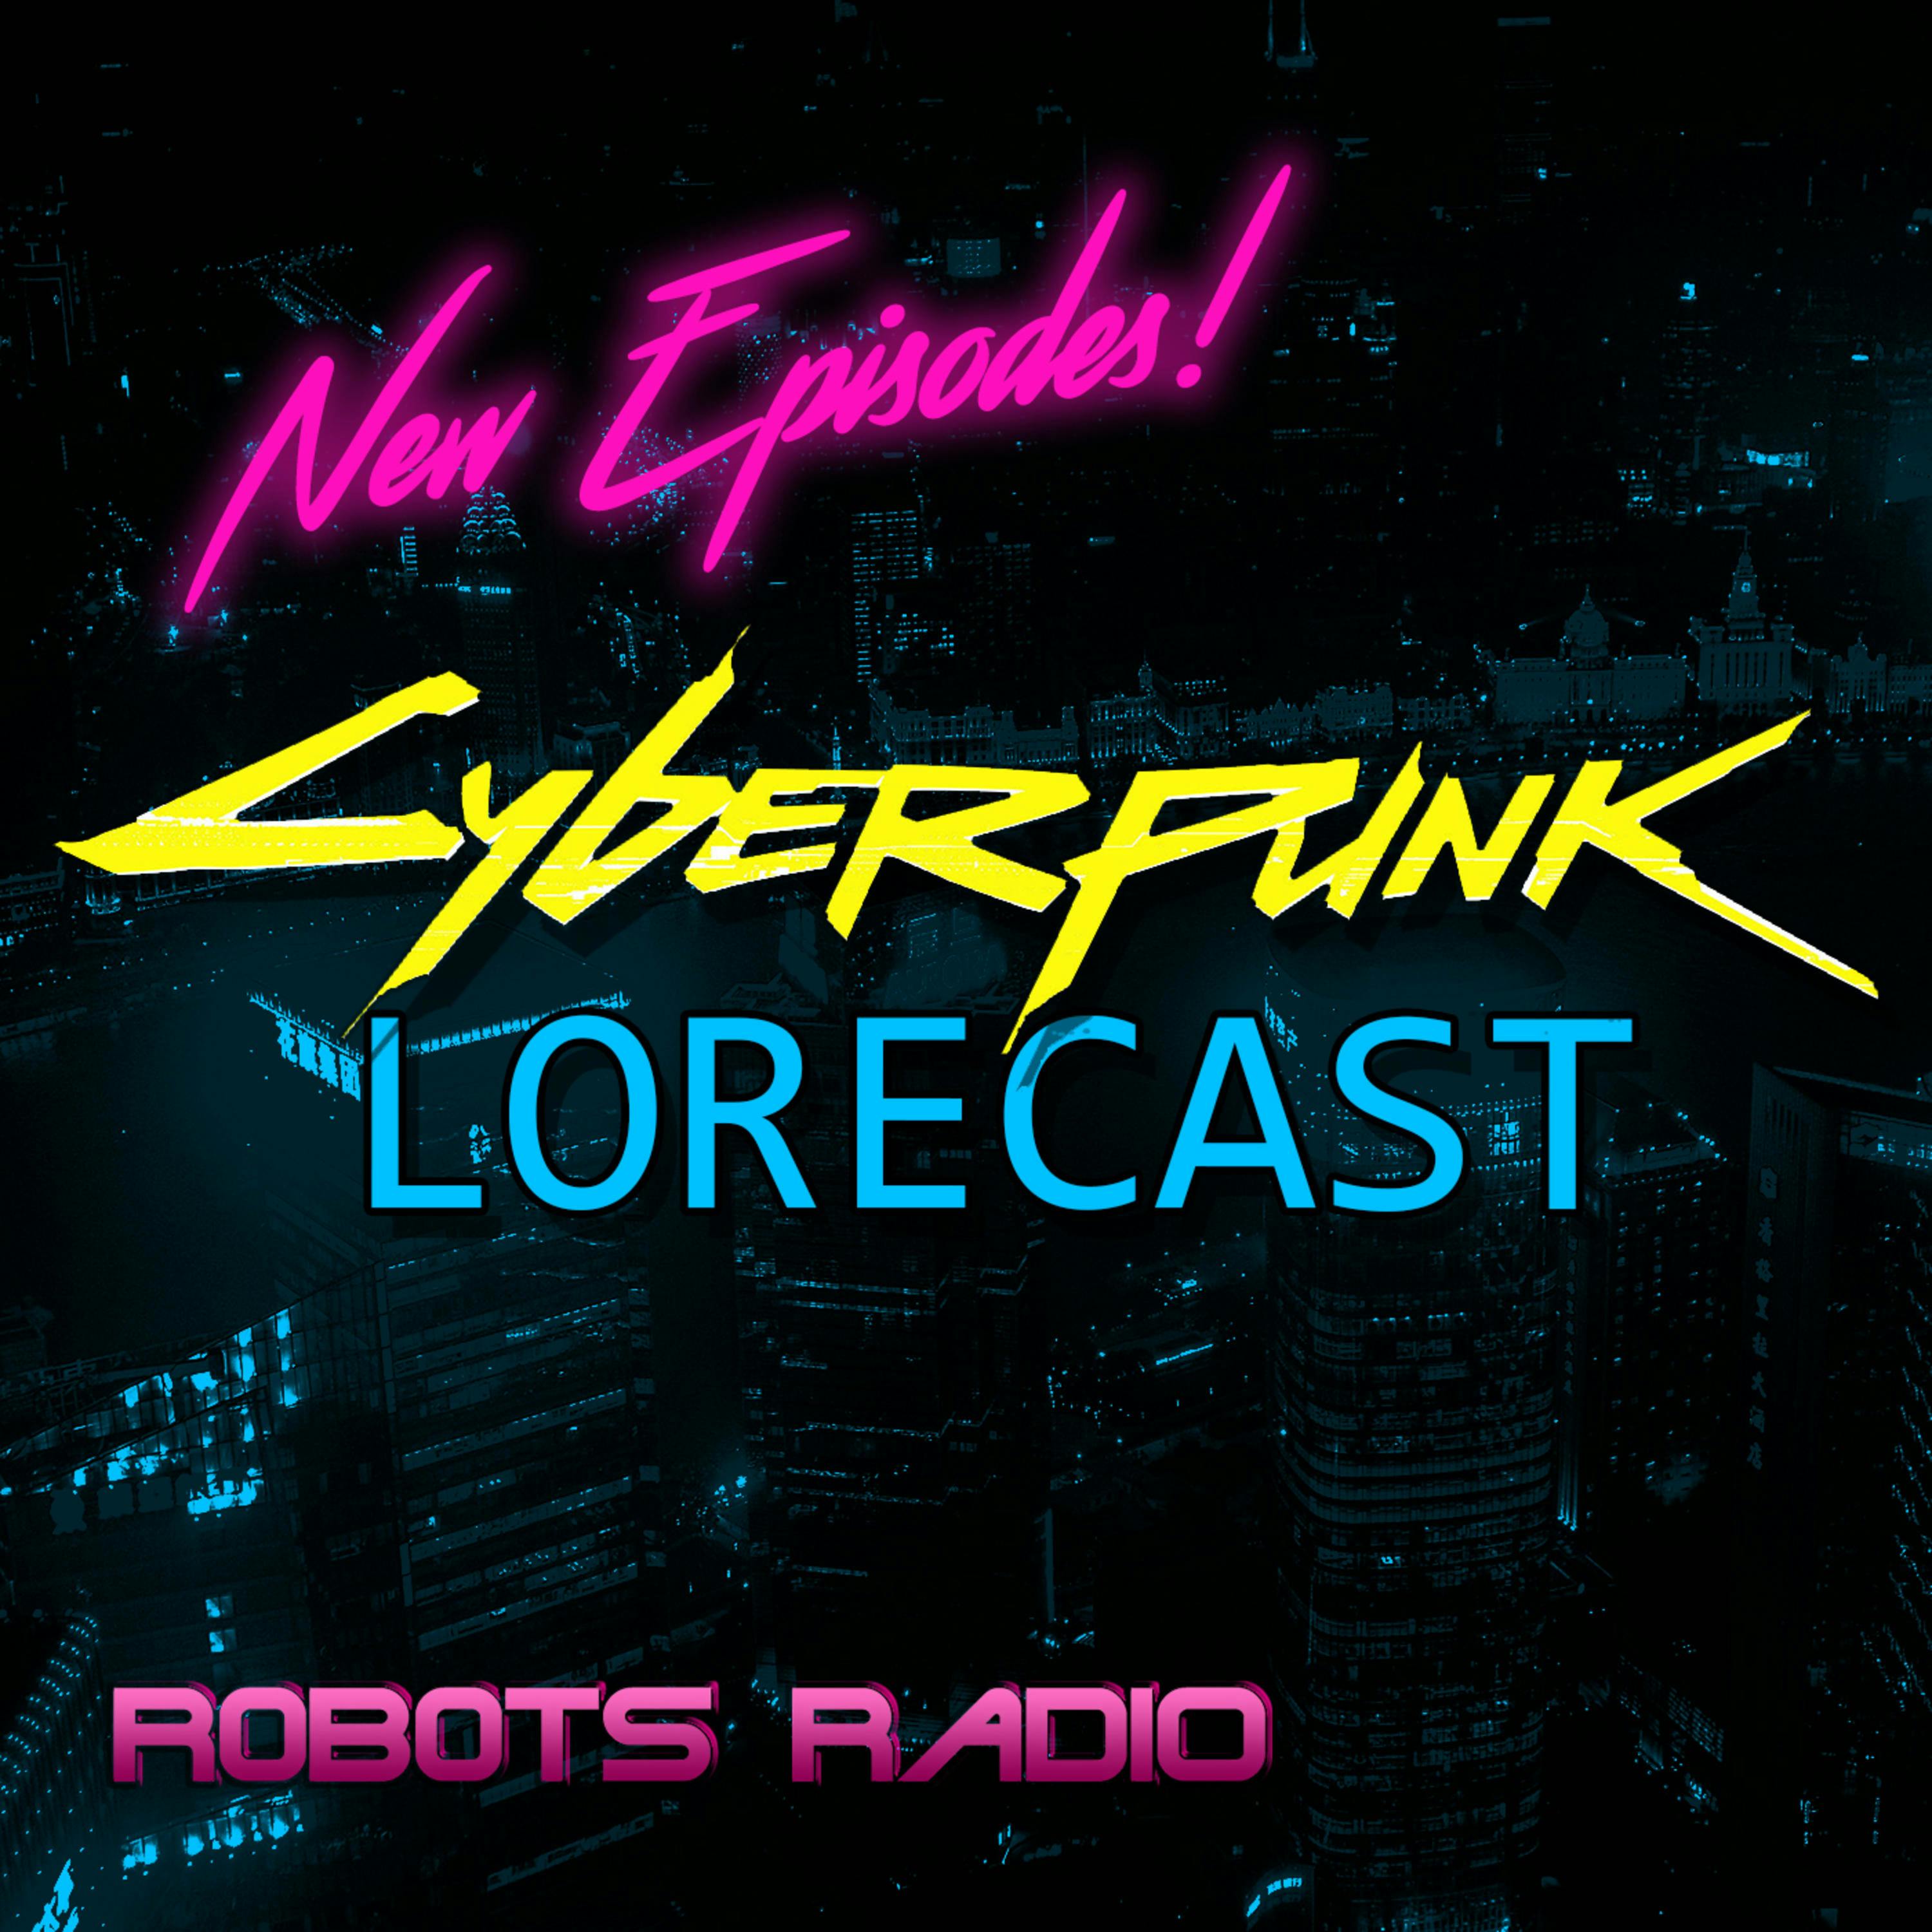 18 :NEWS: New Cyberpunk 2077 Details, Cyberupyourpc finalists, Mike Pondsmith speaks, and more!